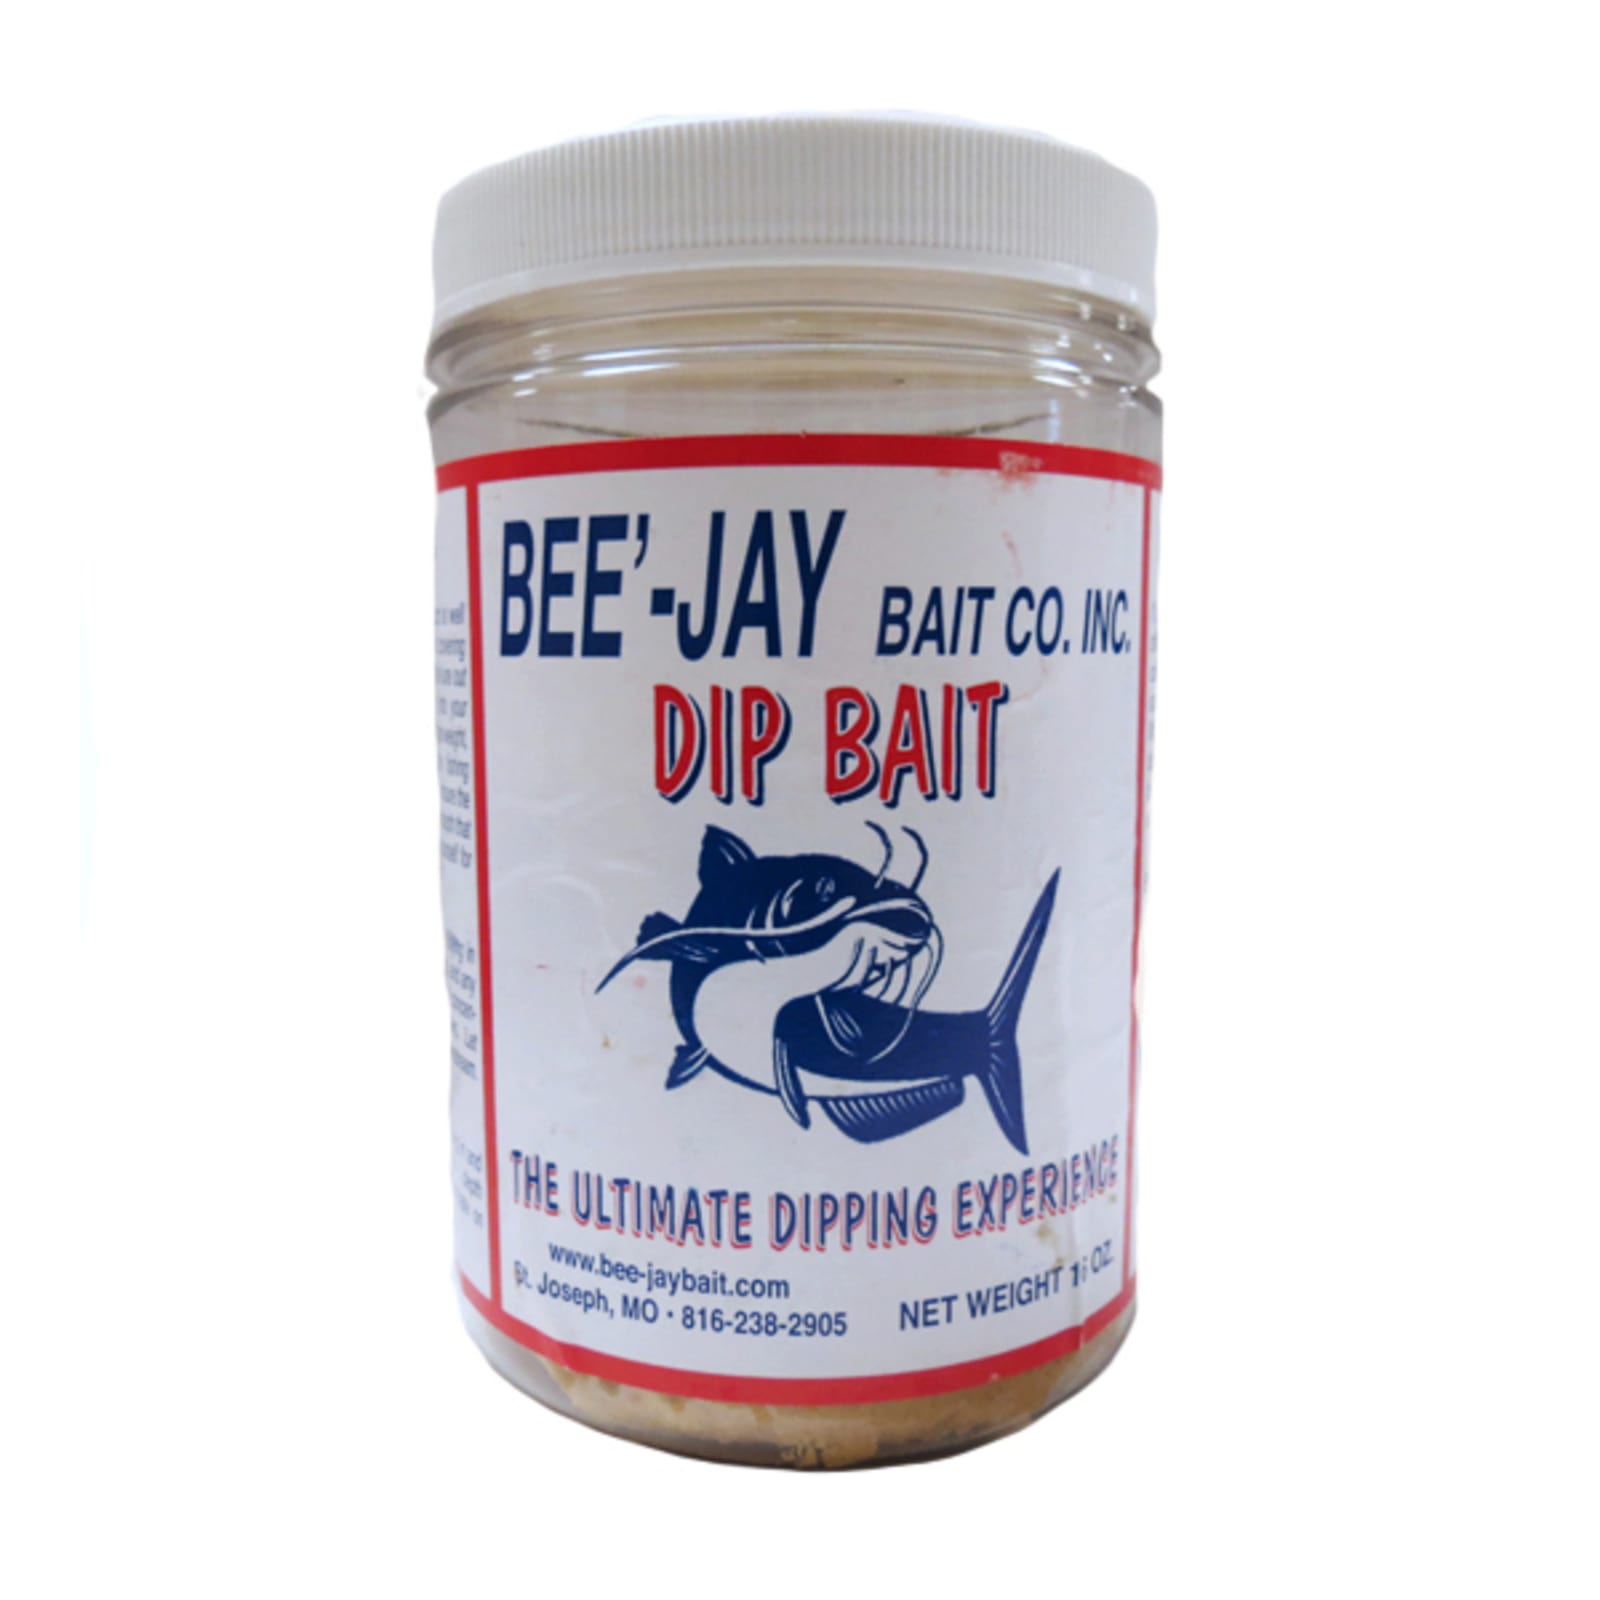 Catfish Dip Bait Jar - Original by Bee'-Jay at Fleet Farm